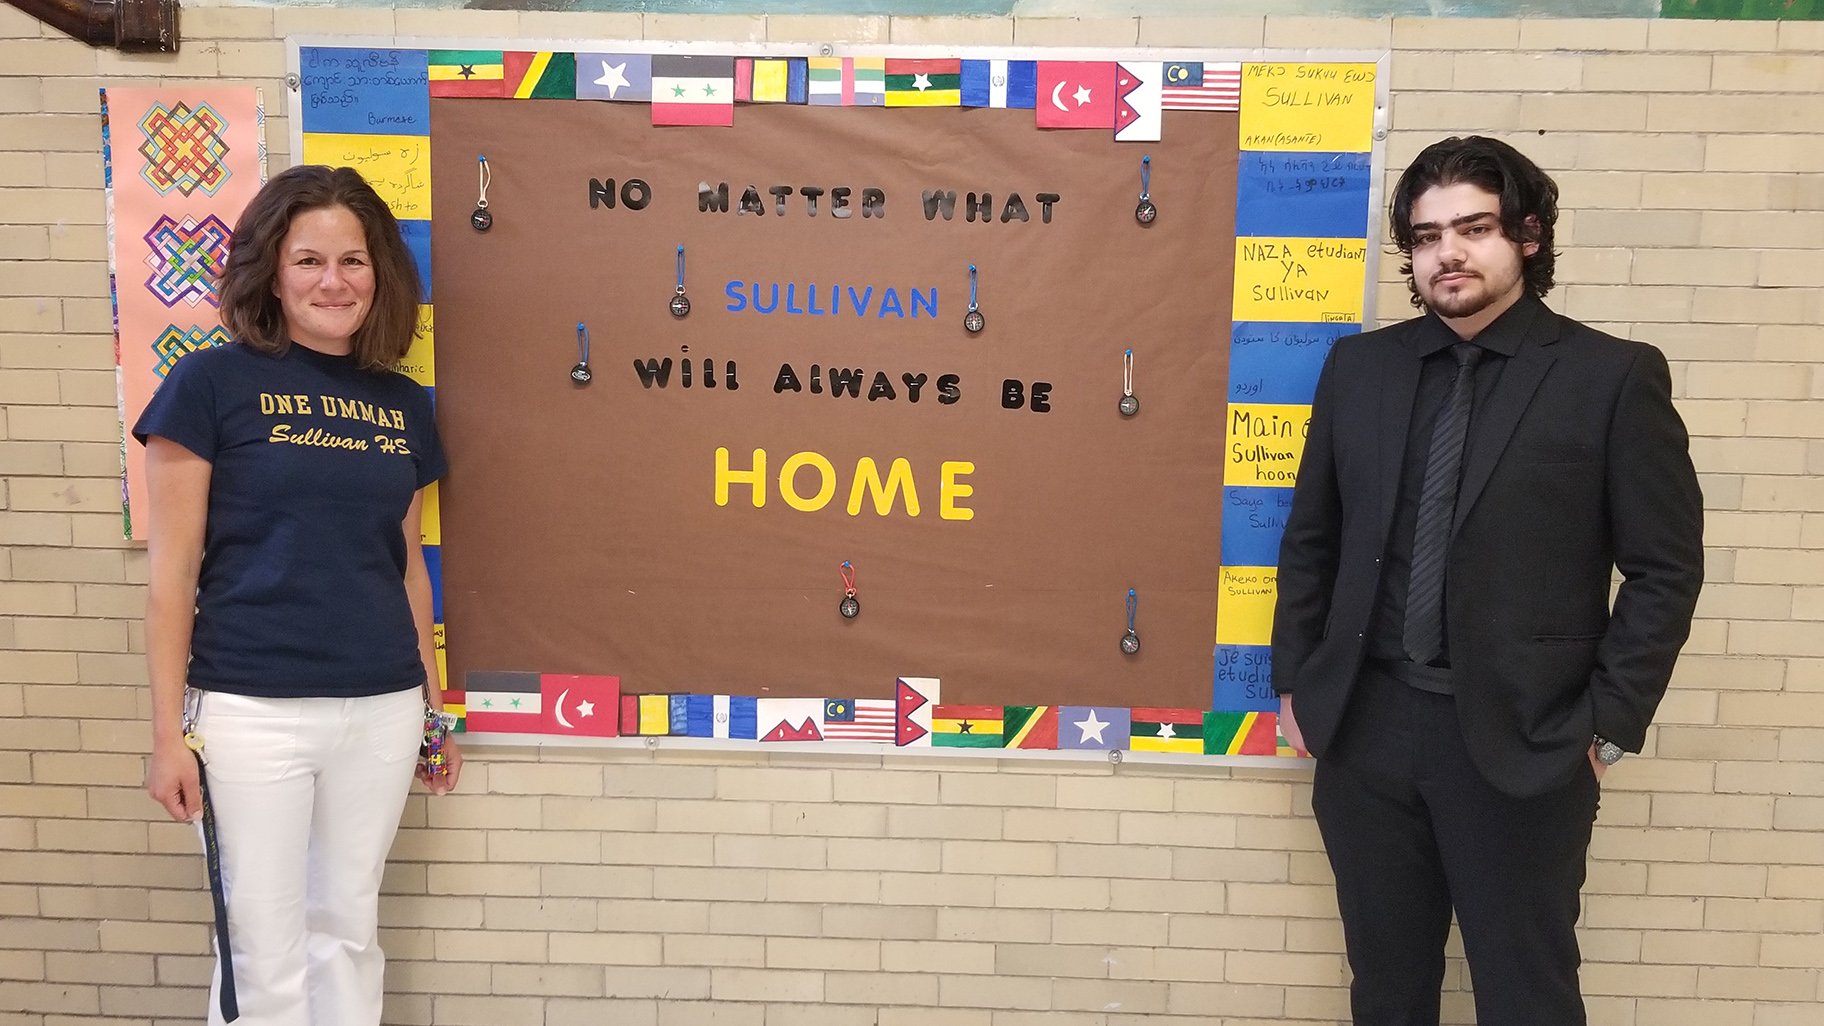 Alaaulldin Al Ibrahim and Sarah Quintenz inside Roger C. Sullivan High School (Matt Masterson / WTTW News)